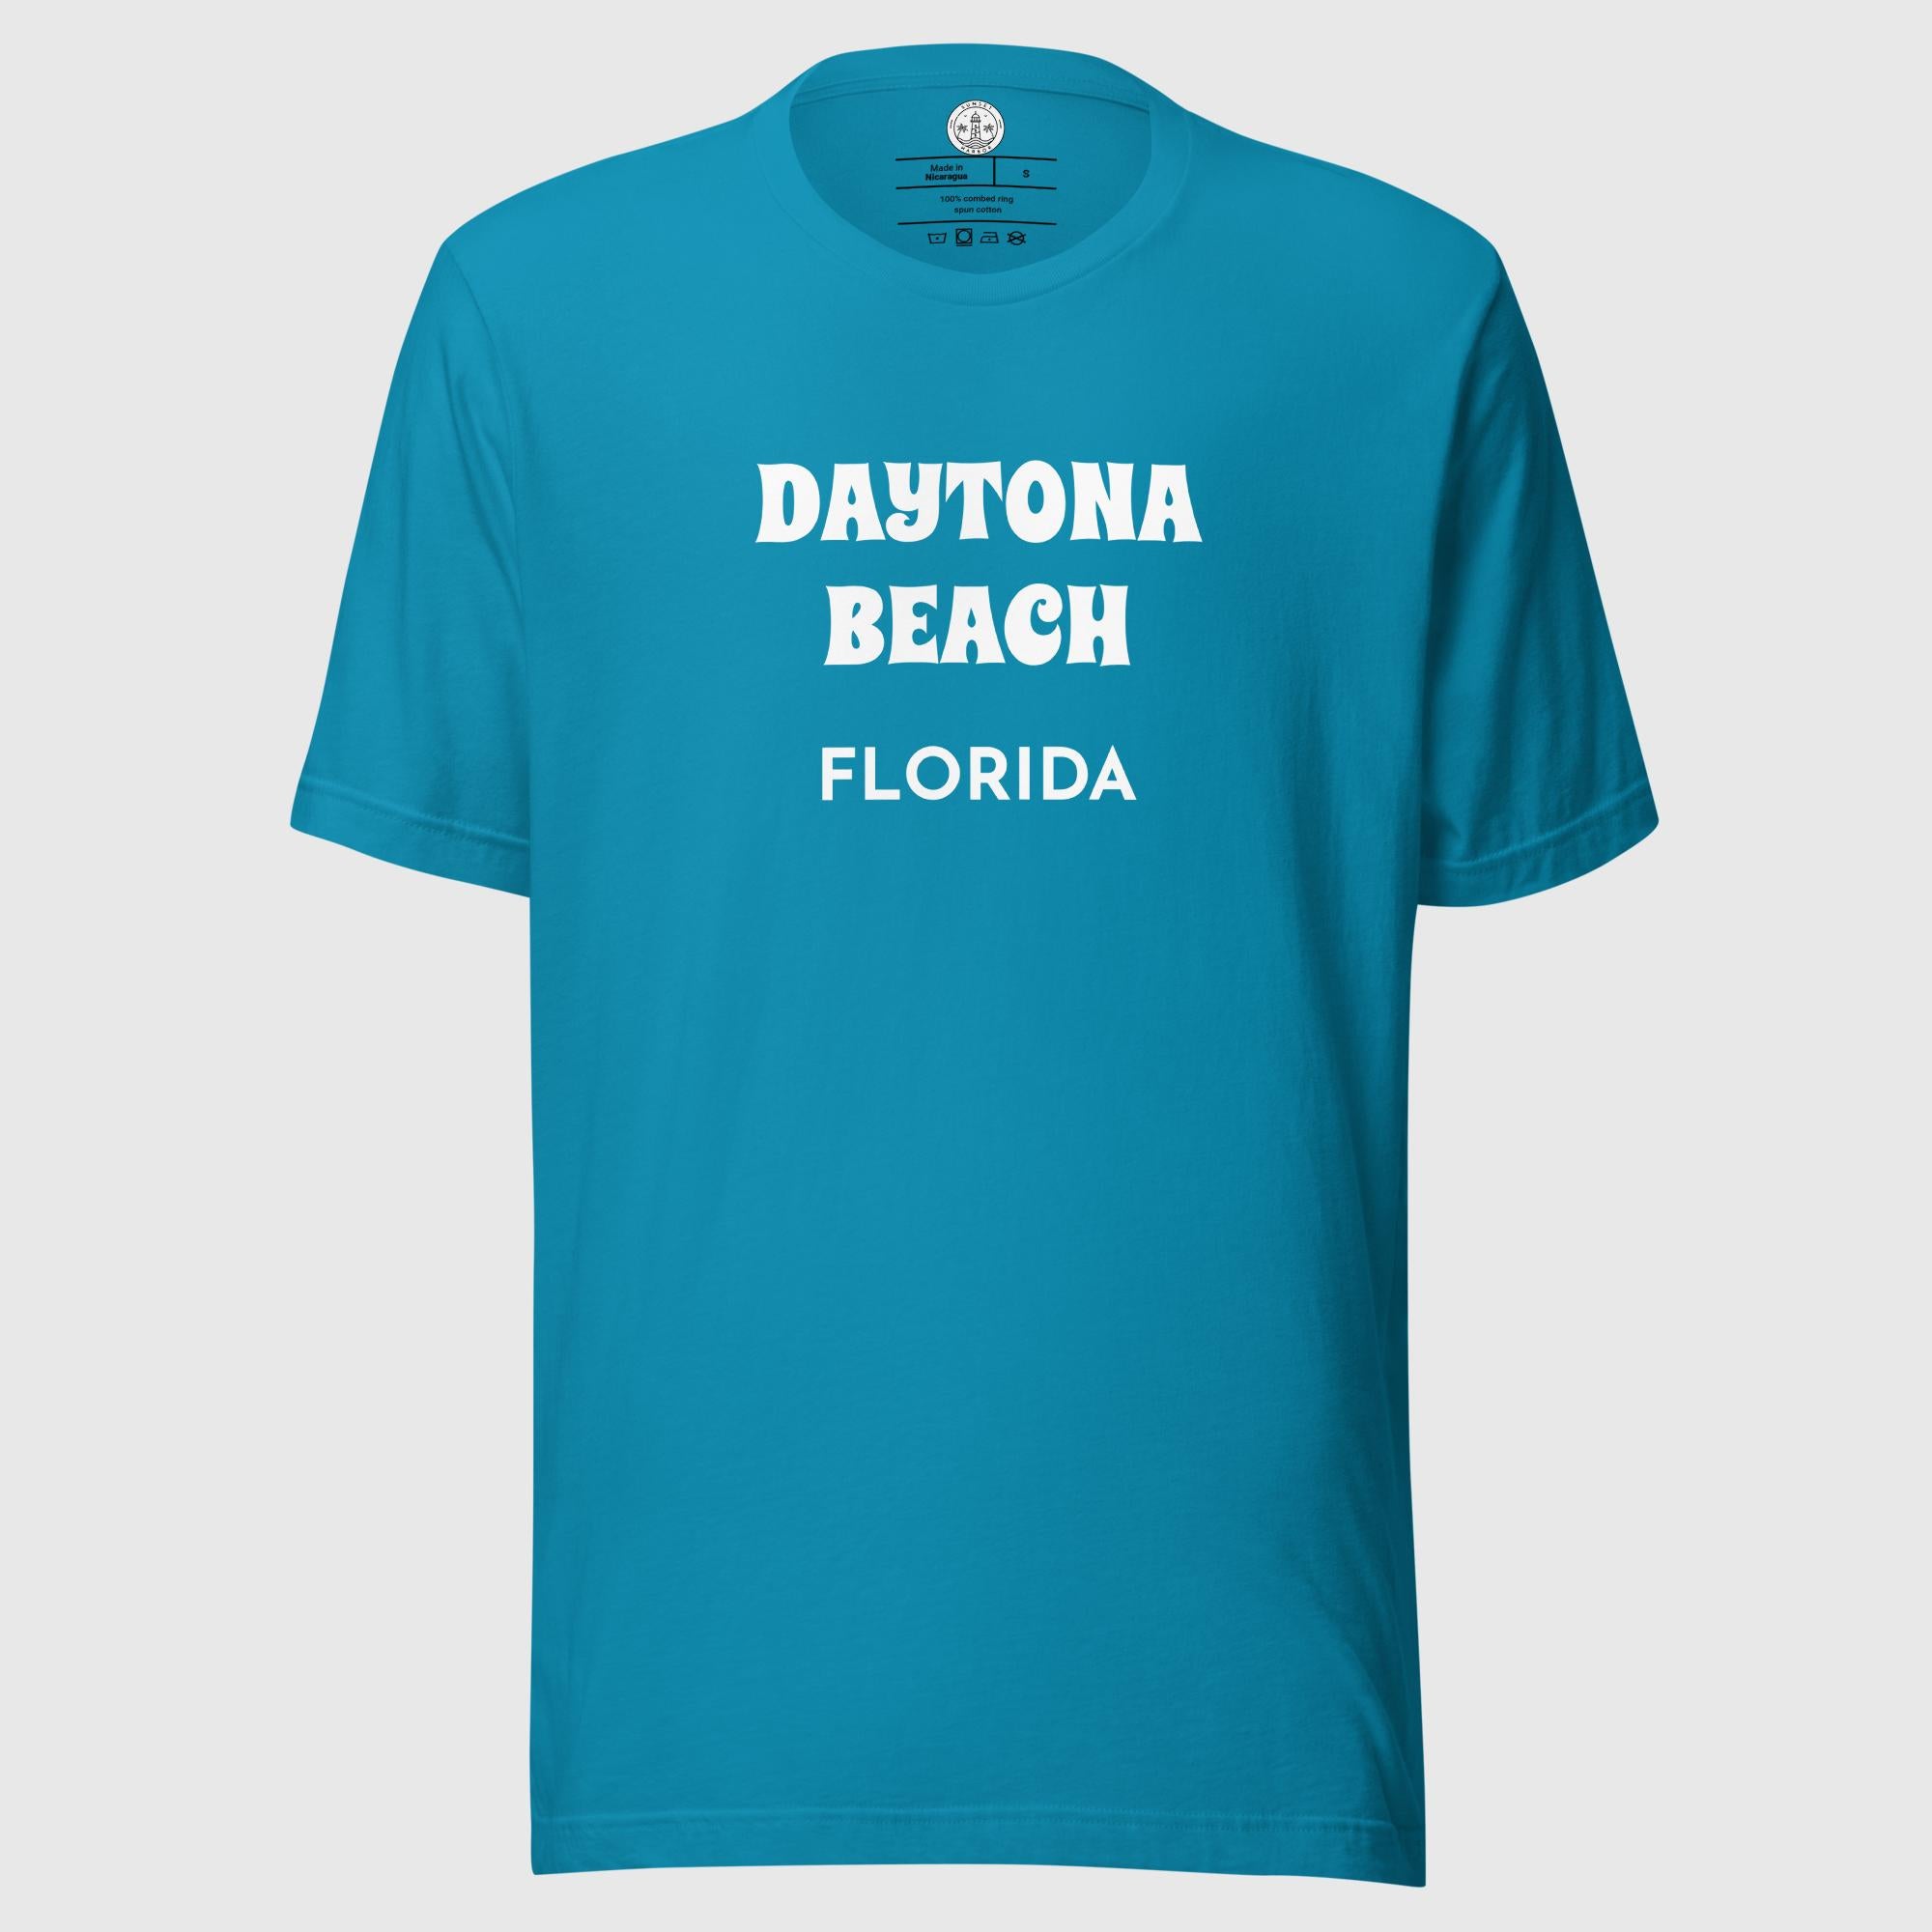 Camiseta unisex - Daytona Beach